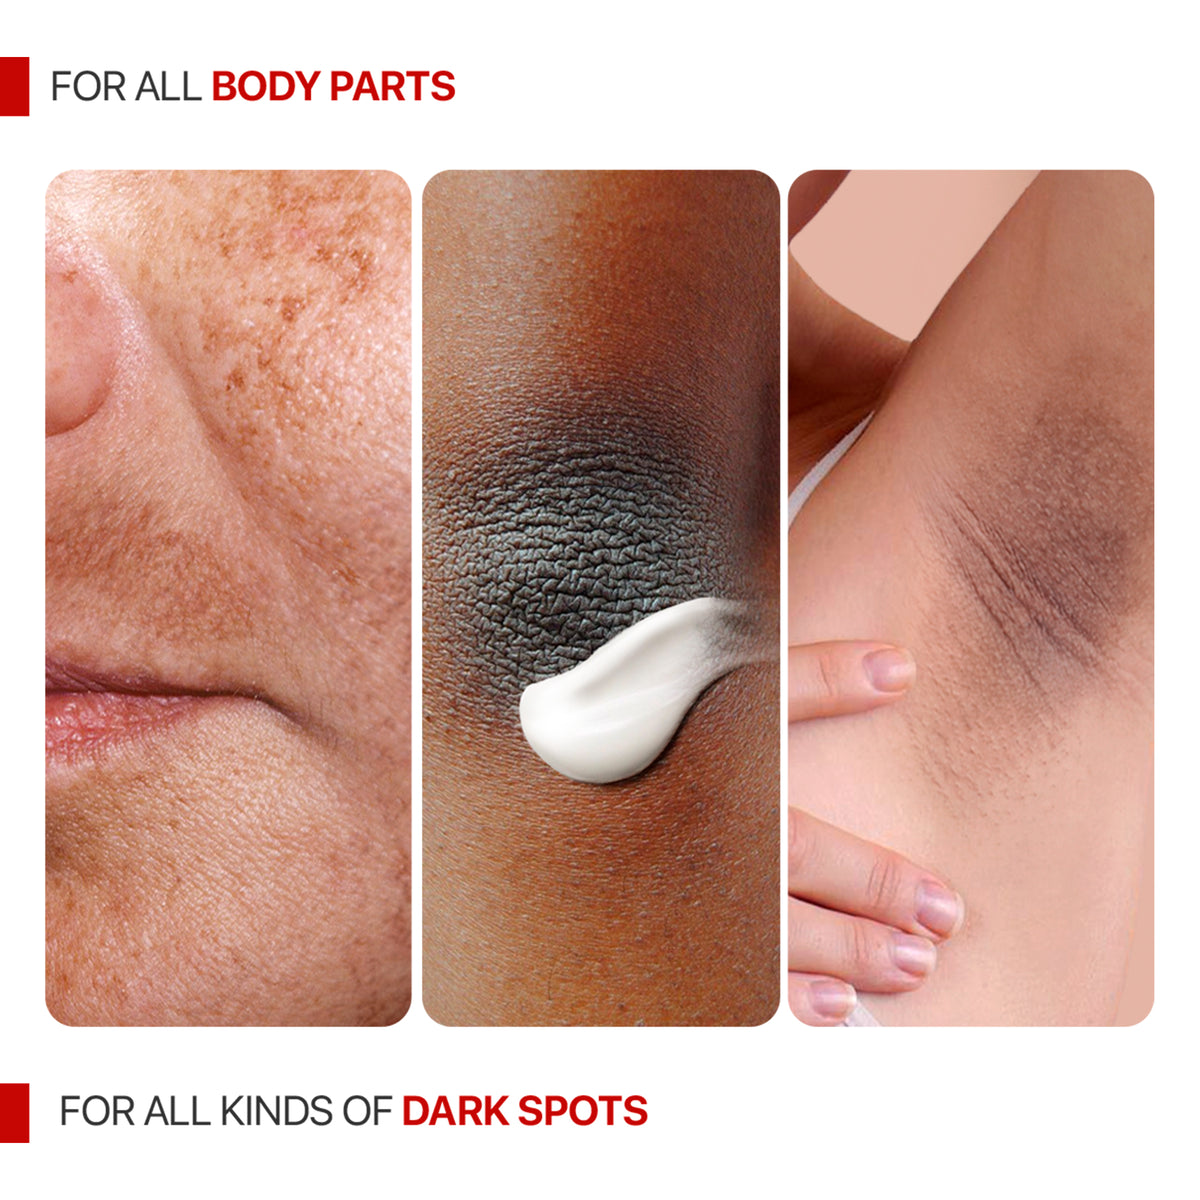 Vitaminized Dark Spot Corrector Sale for Face, Skin, Body, and Legs